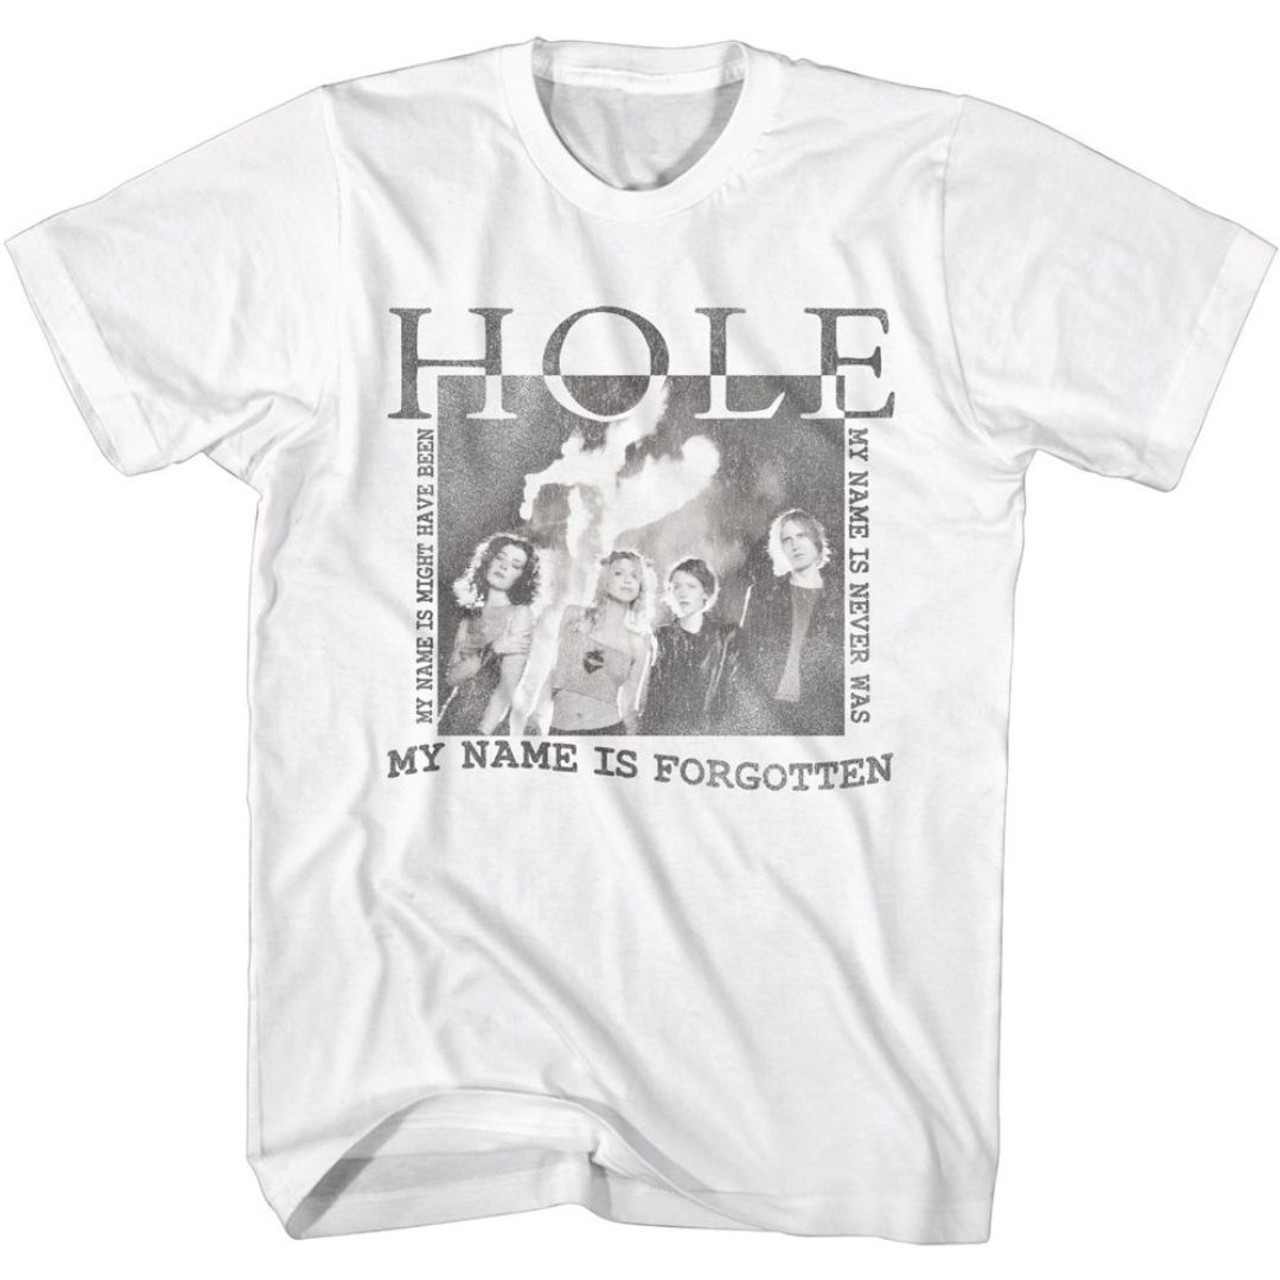 Hole Celebrity Skin Album Cover Photograph and Song Lyrics Men's Unisex  White Fashion T-shirt